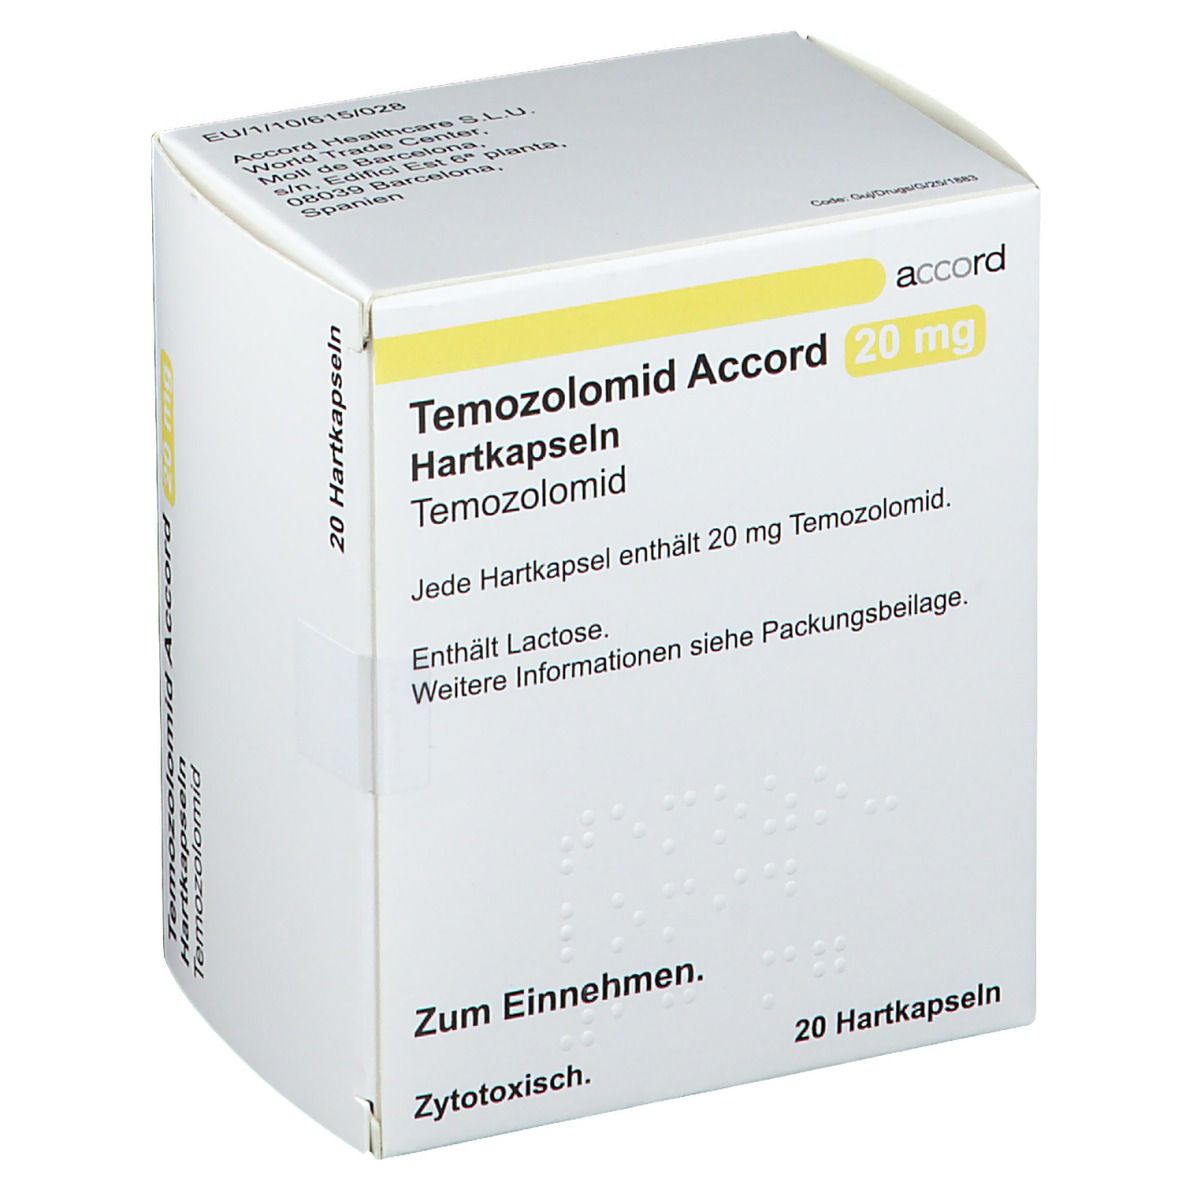 Temozolomid Accord 20 mg